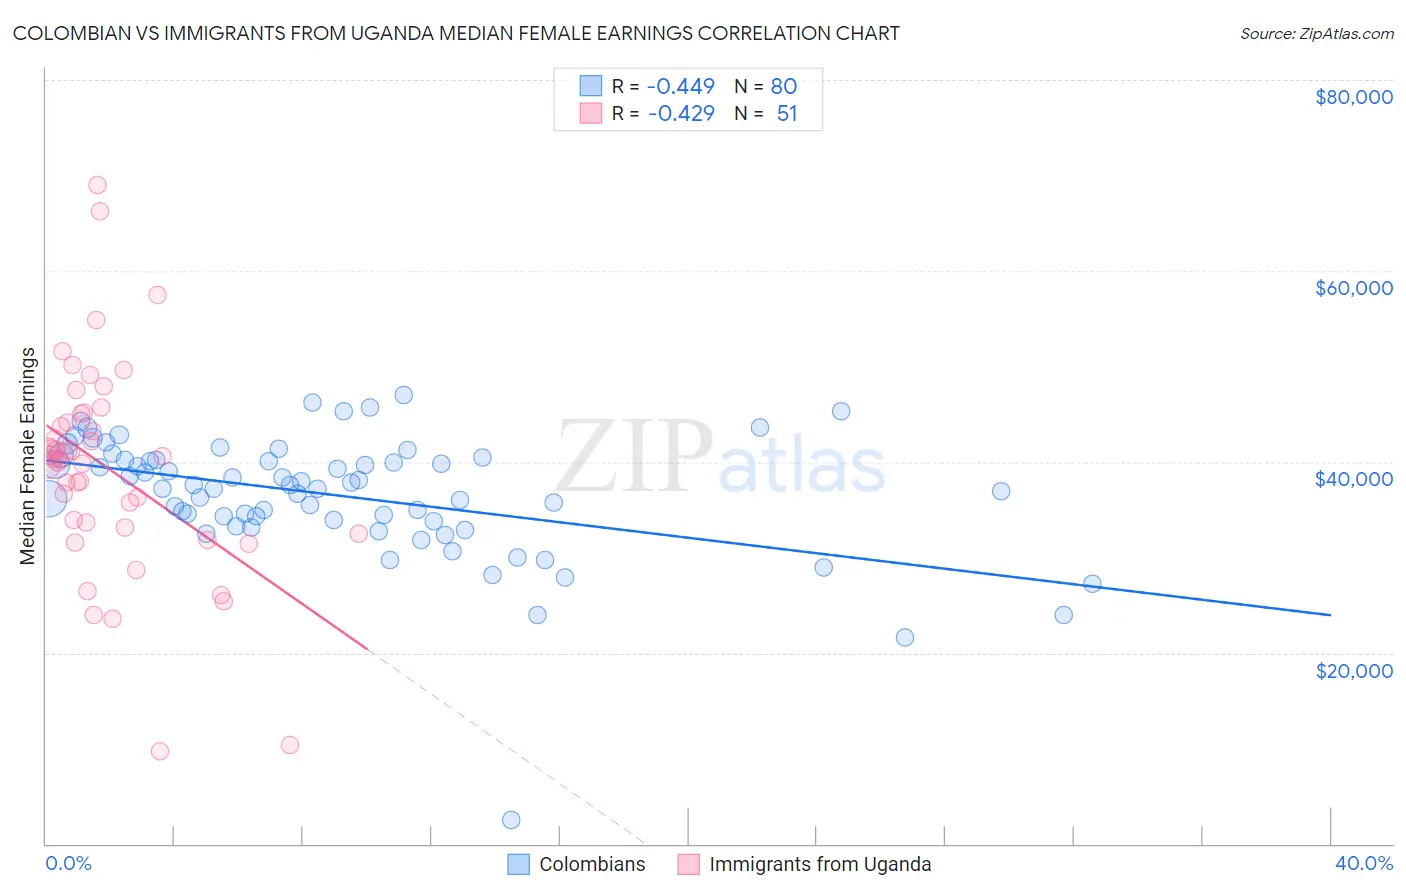 Colombian vs Immigrants from Uganda Median Female Earnings